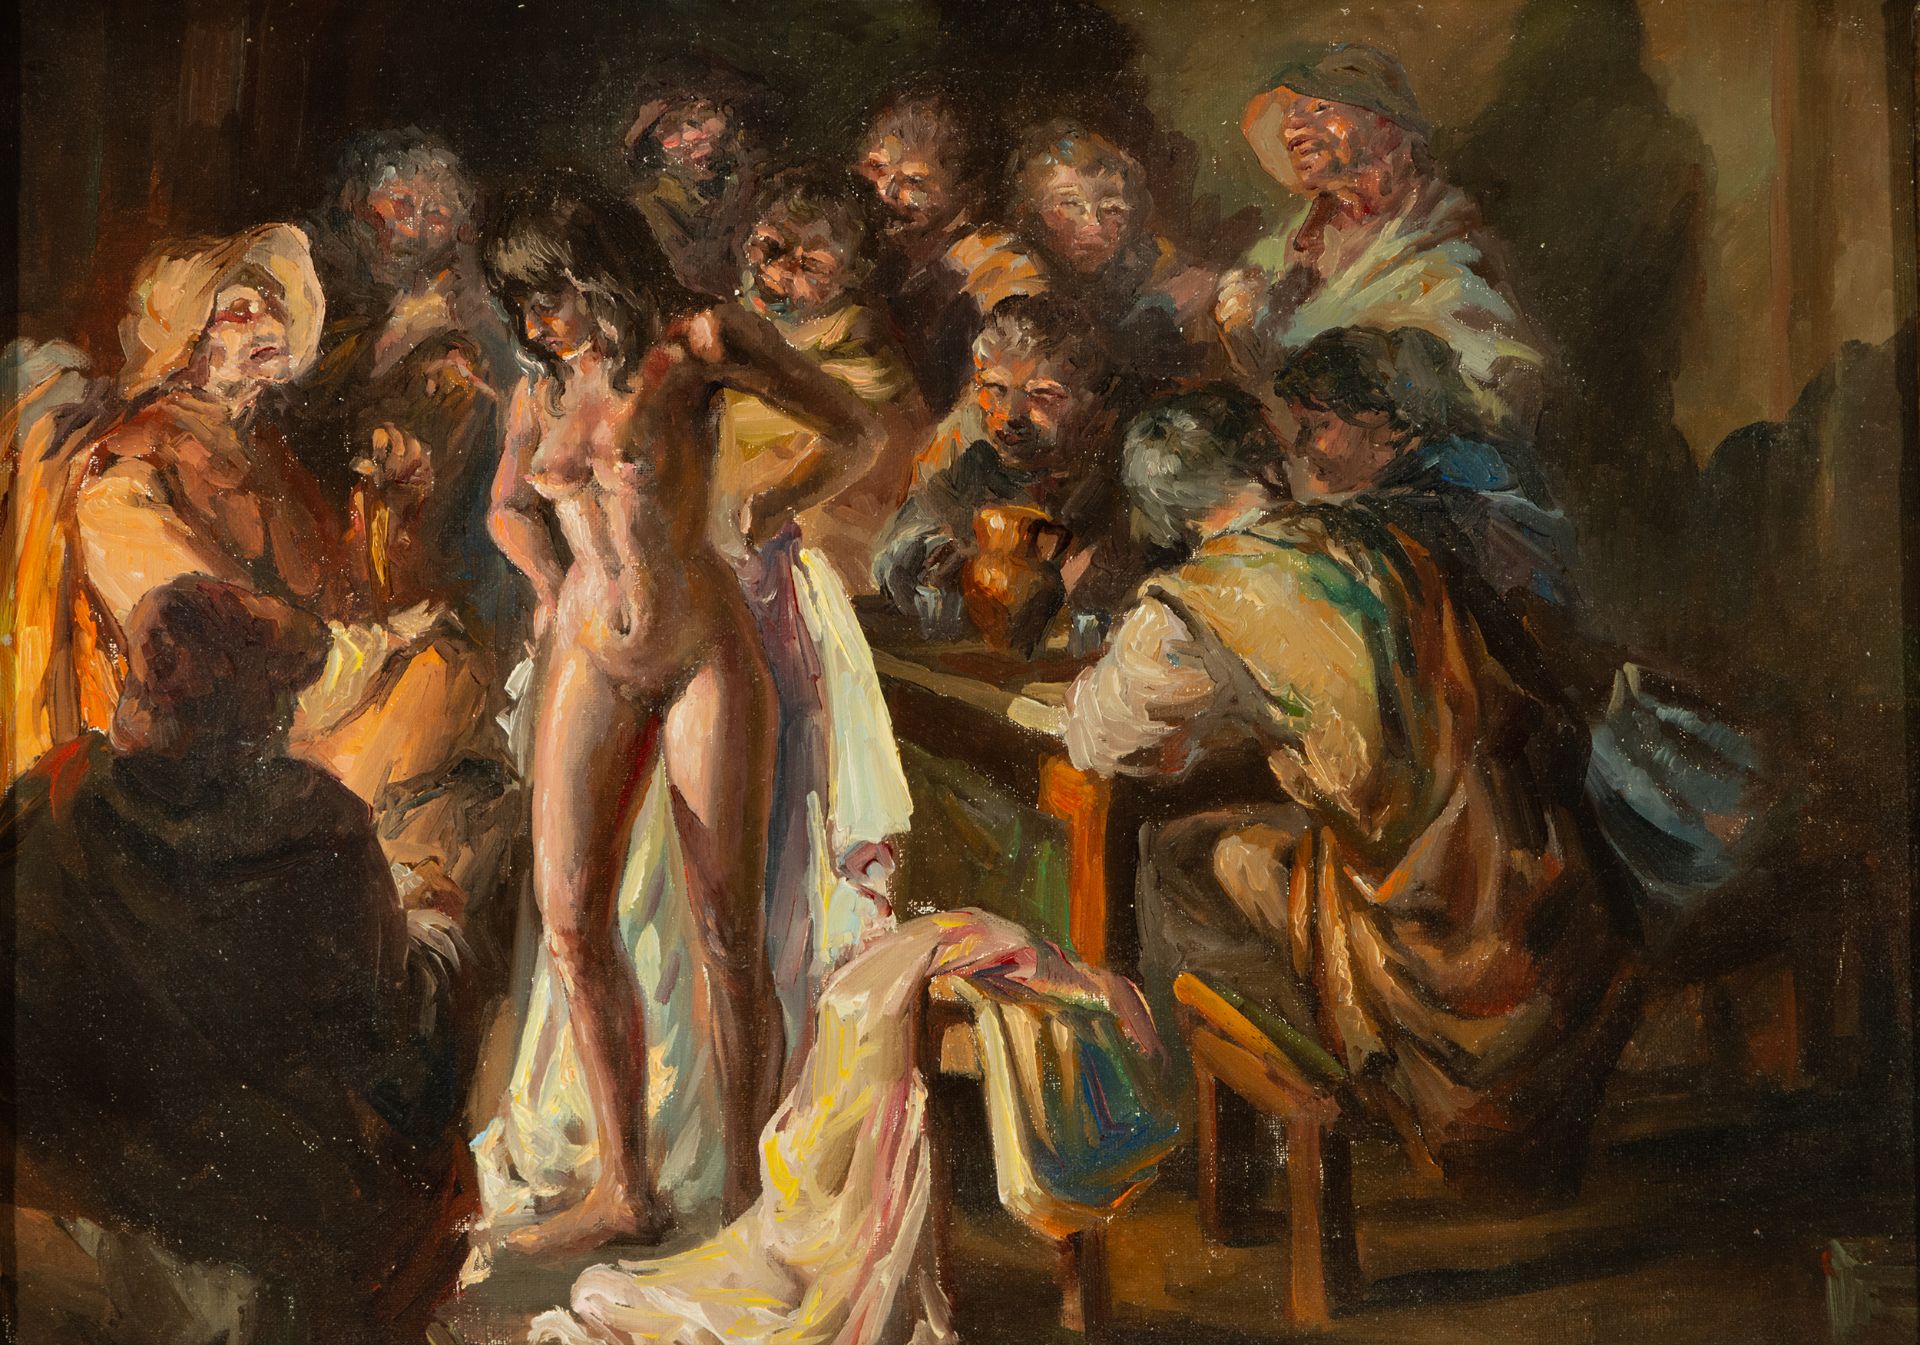 Nude woman dancing, 20th century European Post-Impressionist school - Image 2 of 4